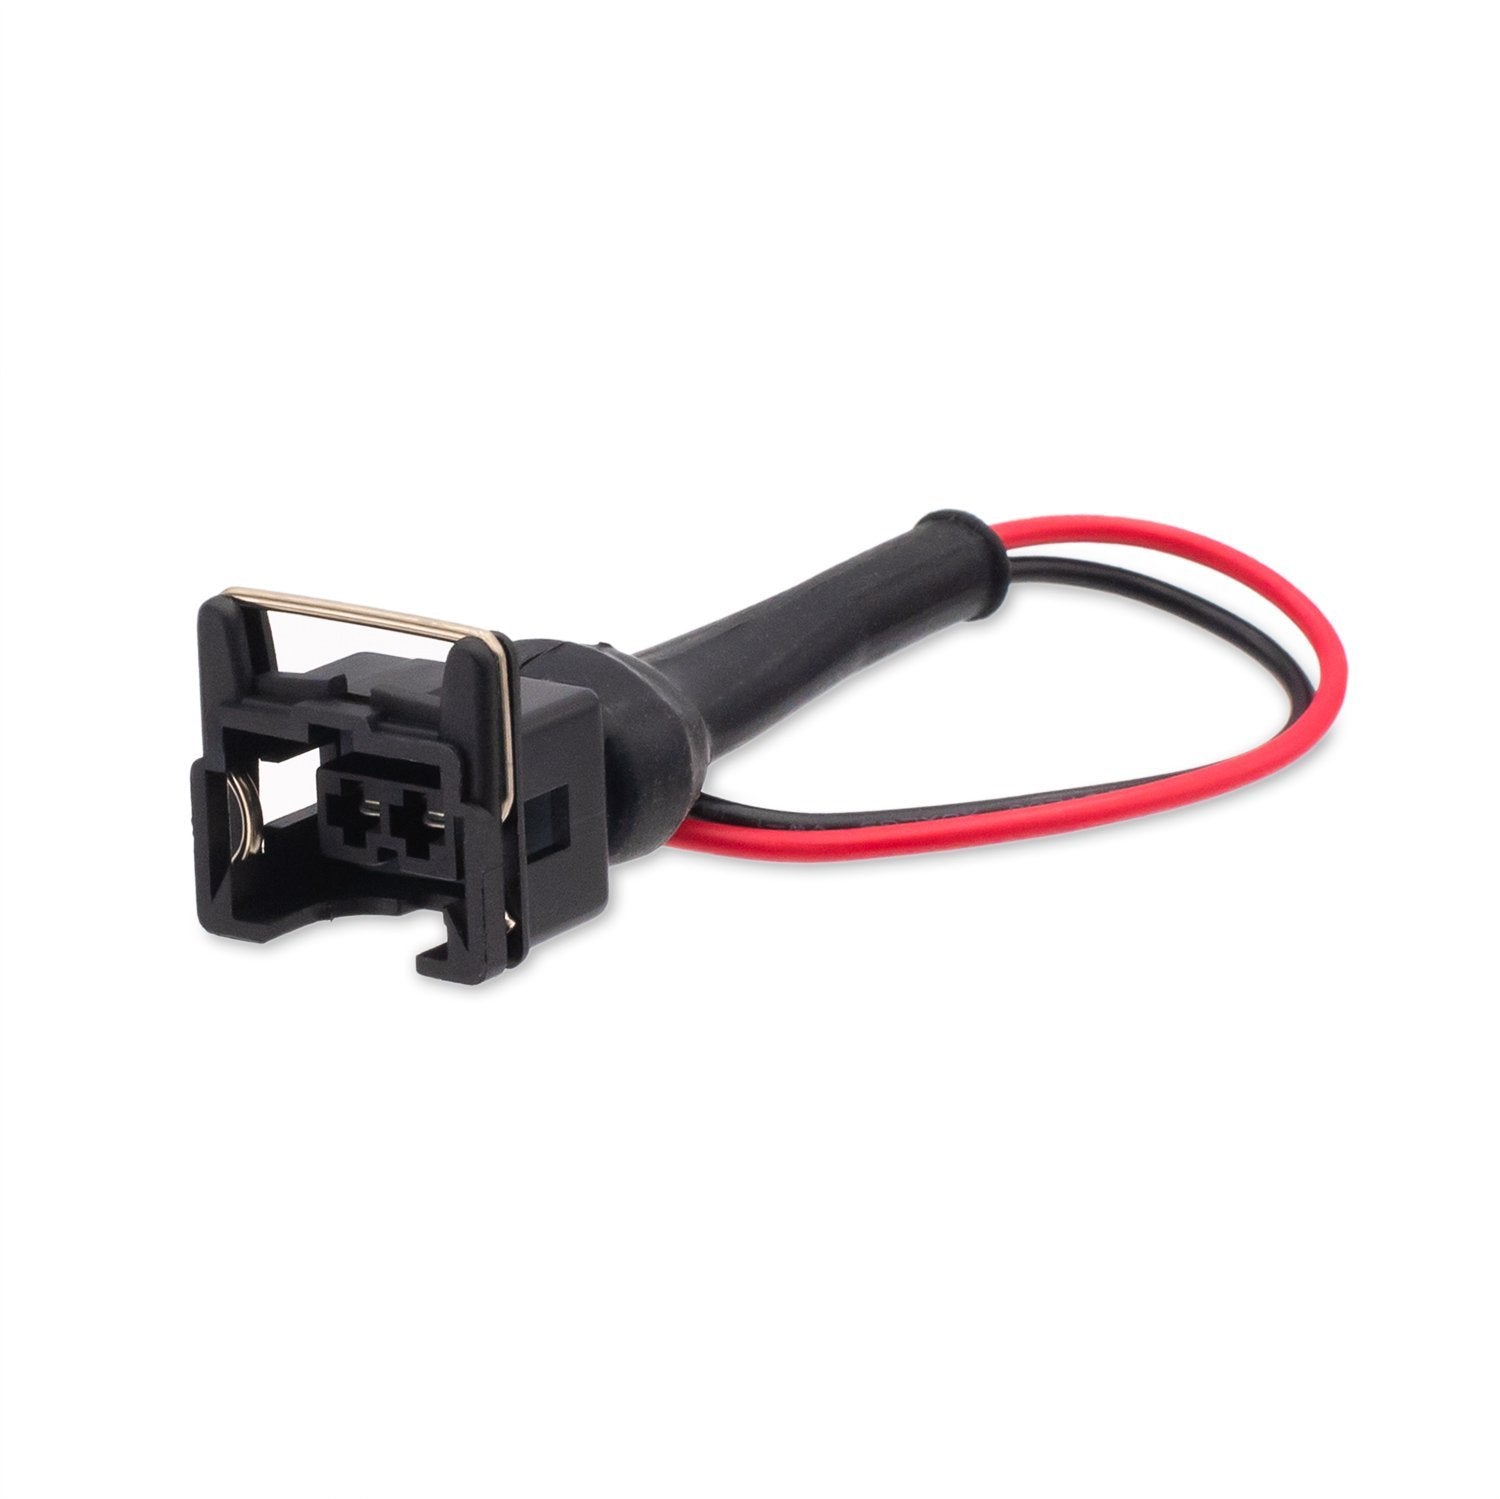 Blox Racing Fuel Injector Adapter Pigtails - EV1/EV14/Denso